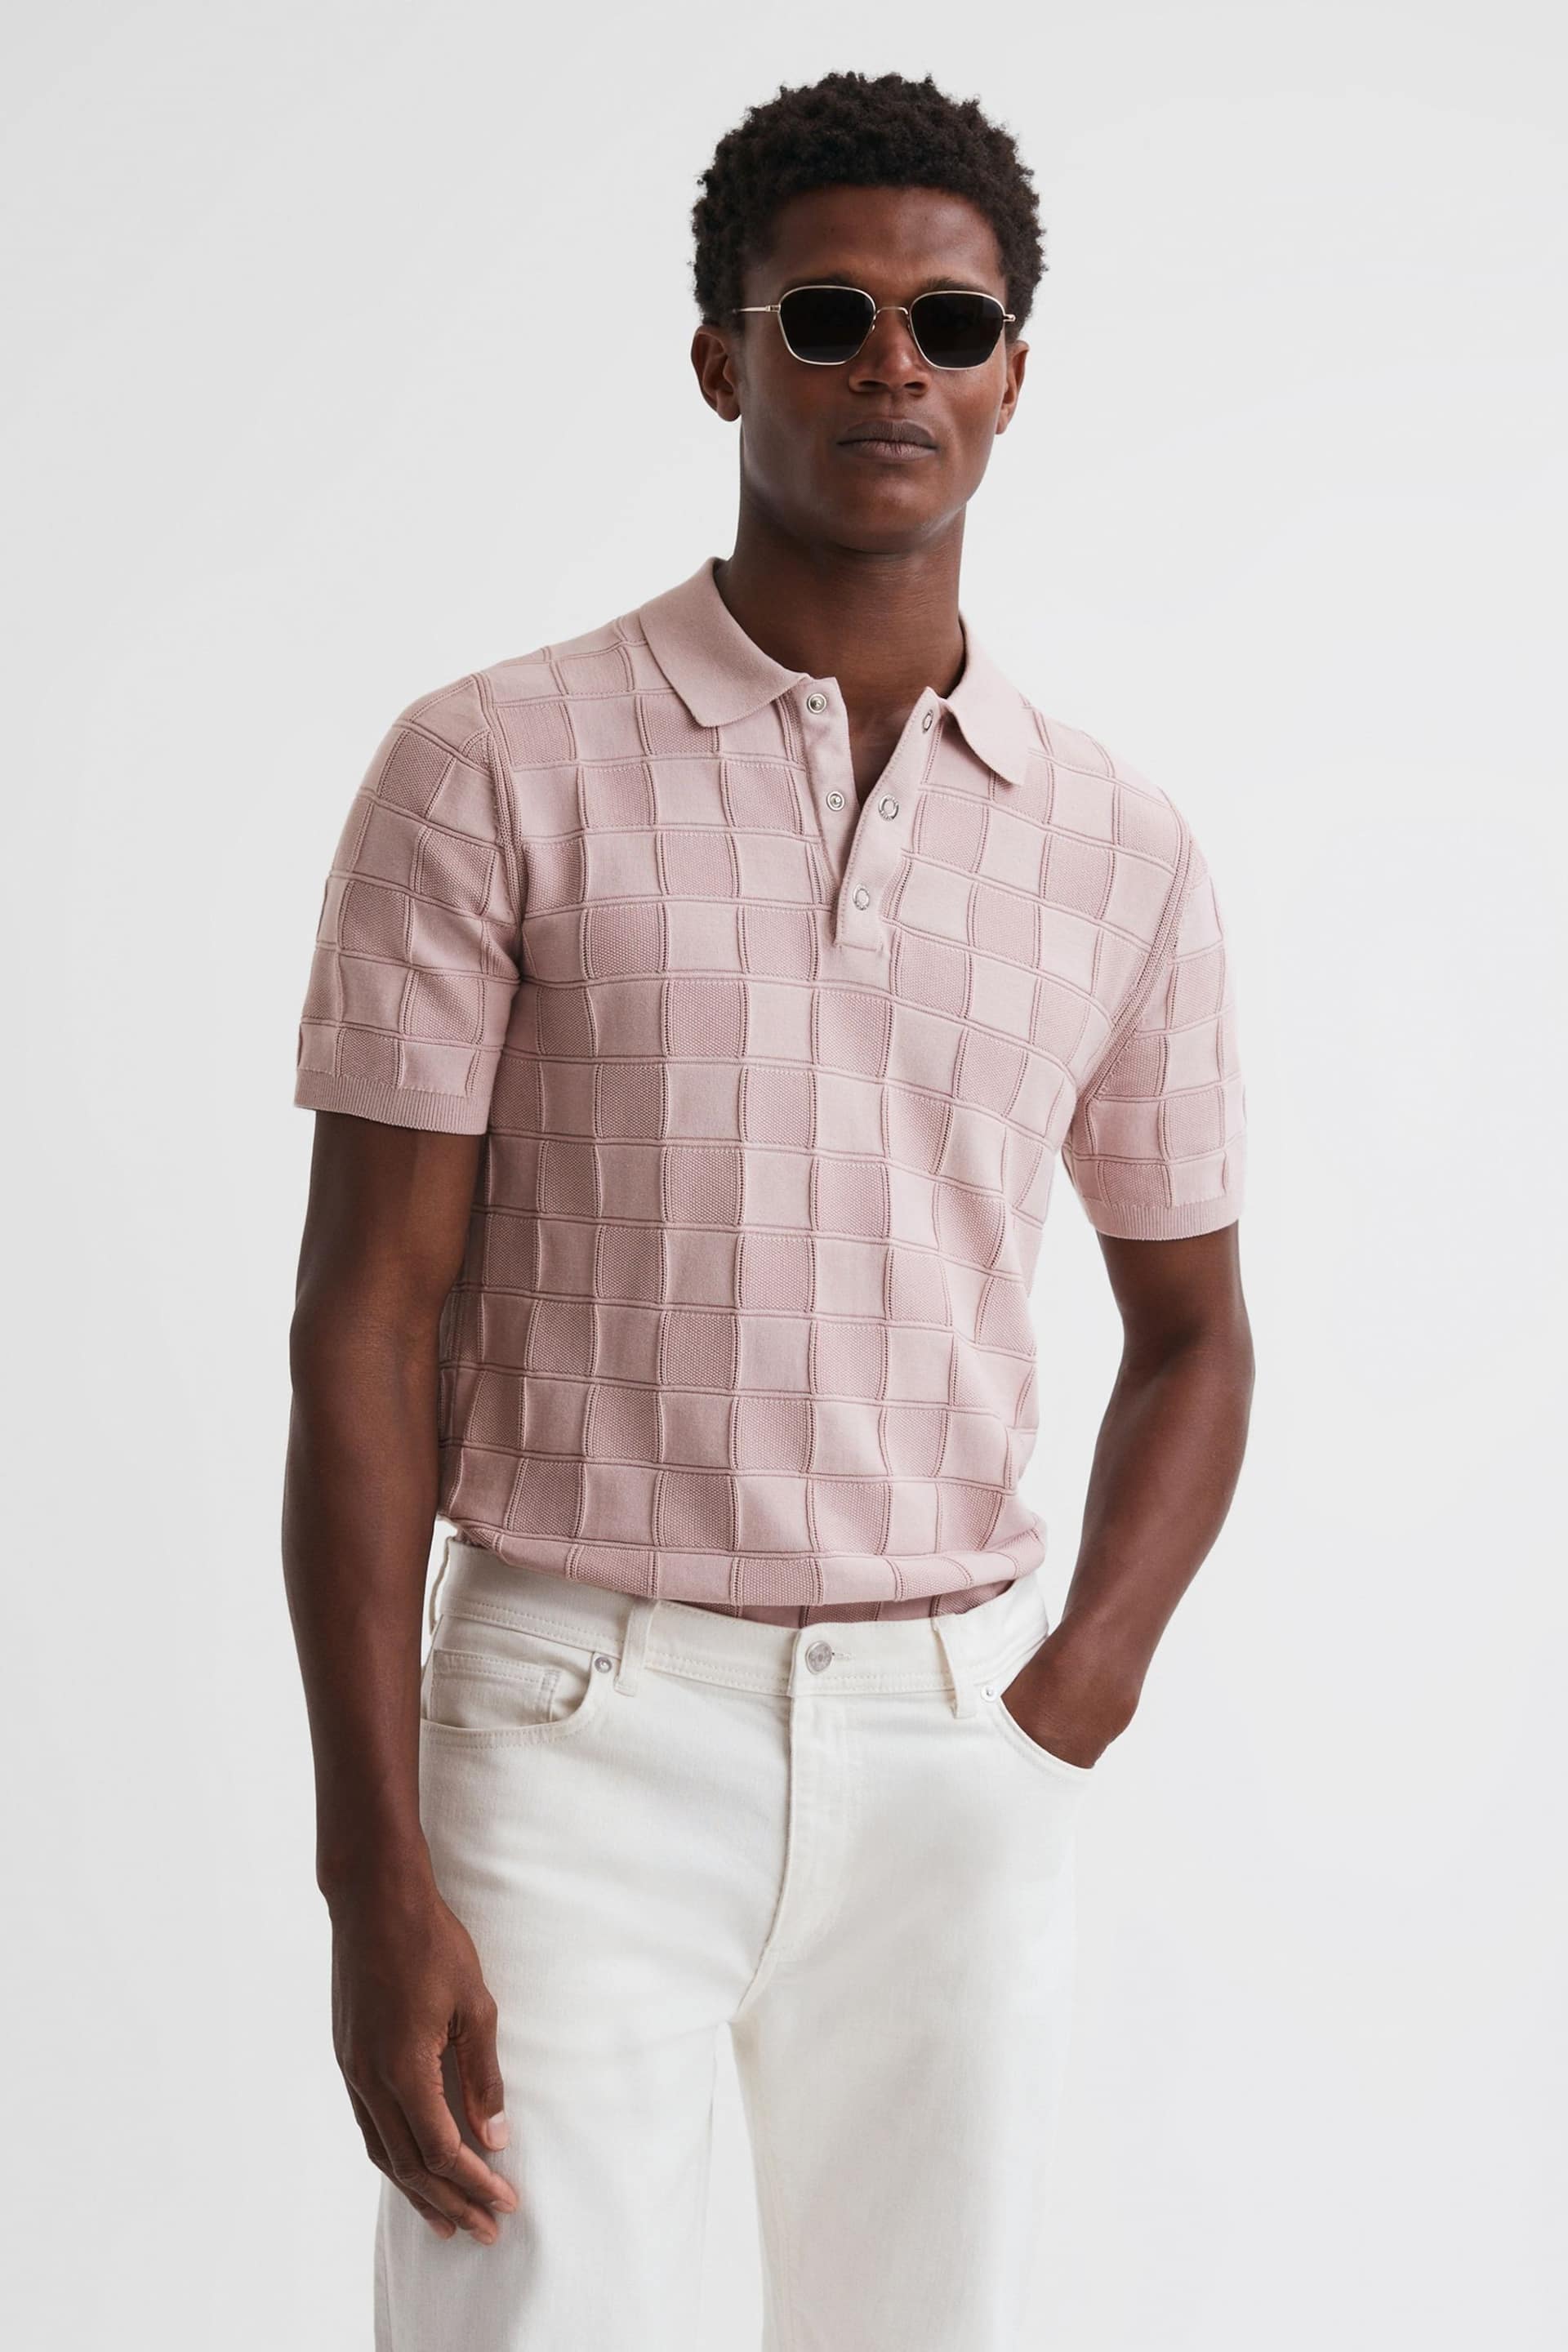 Reiss Soft Pink Blaze Cotton Press-Stud Polo T-Shirt - Image 1 of 5